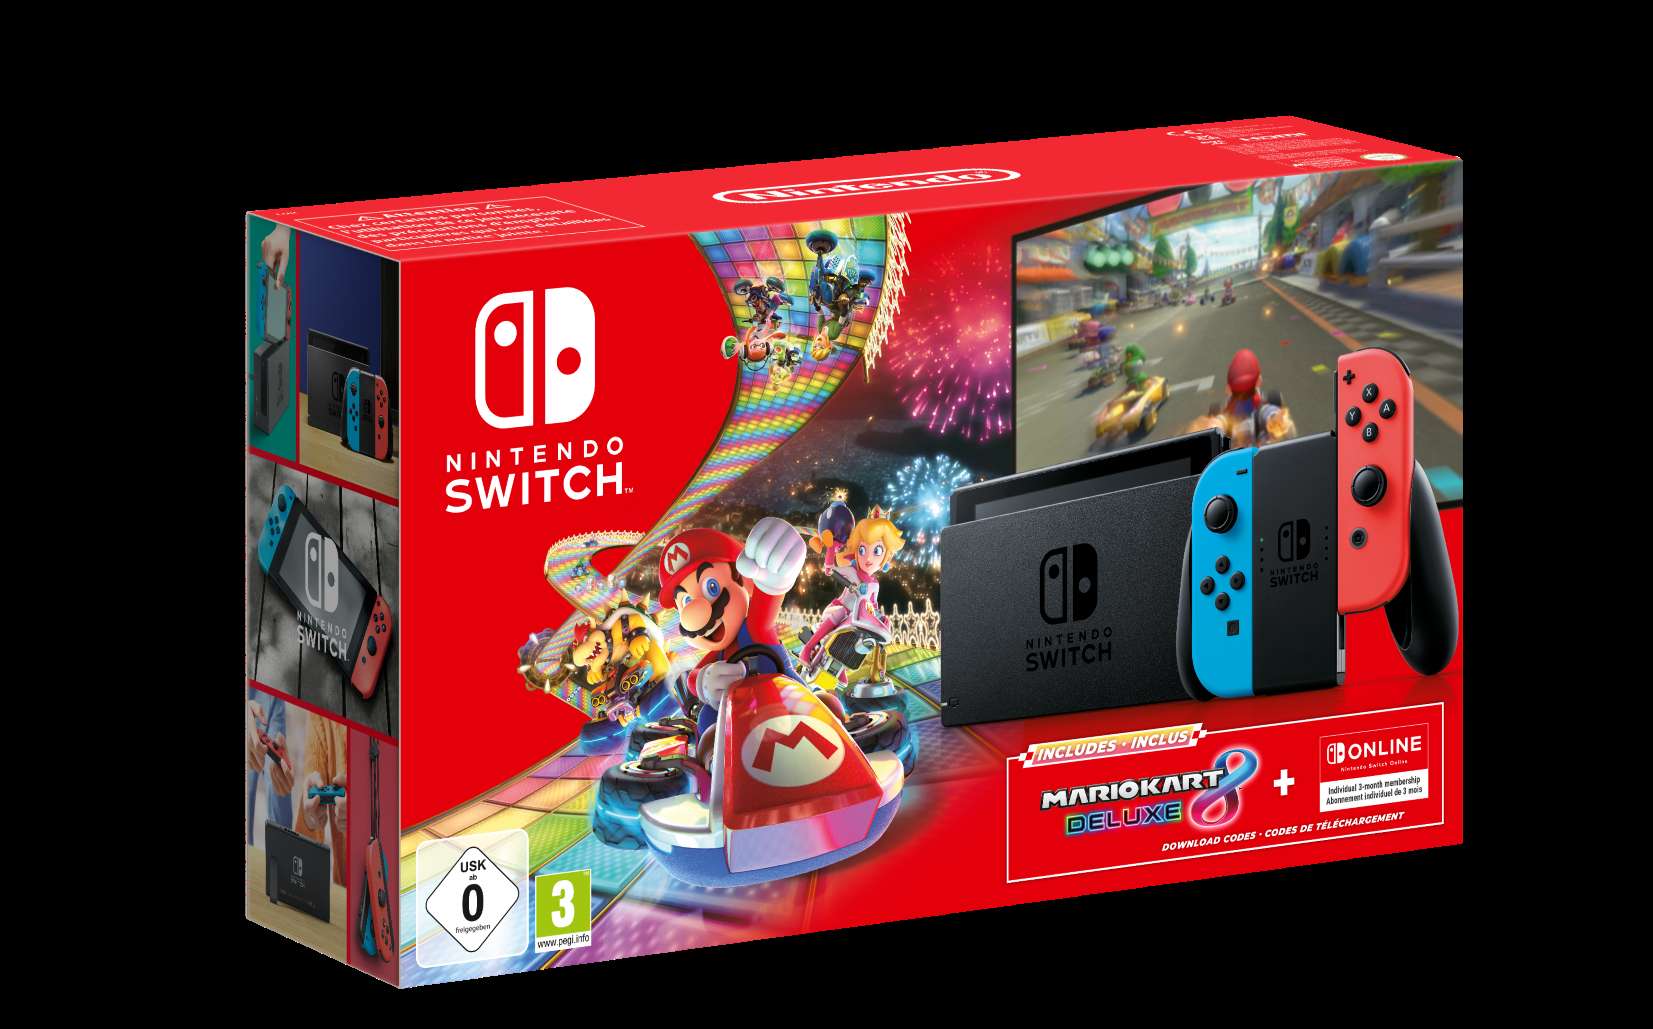 Bundle speciale Nintendo Switch + Mario Kart 8 Deluxe e Switch Online